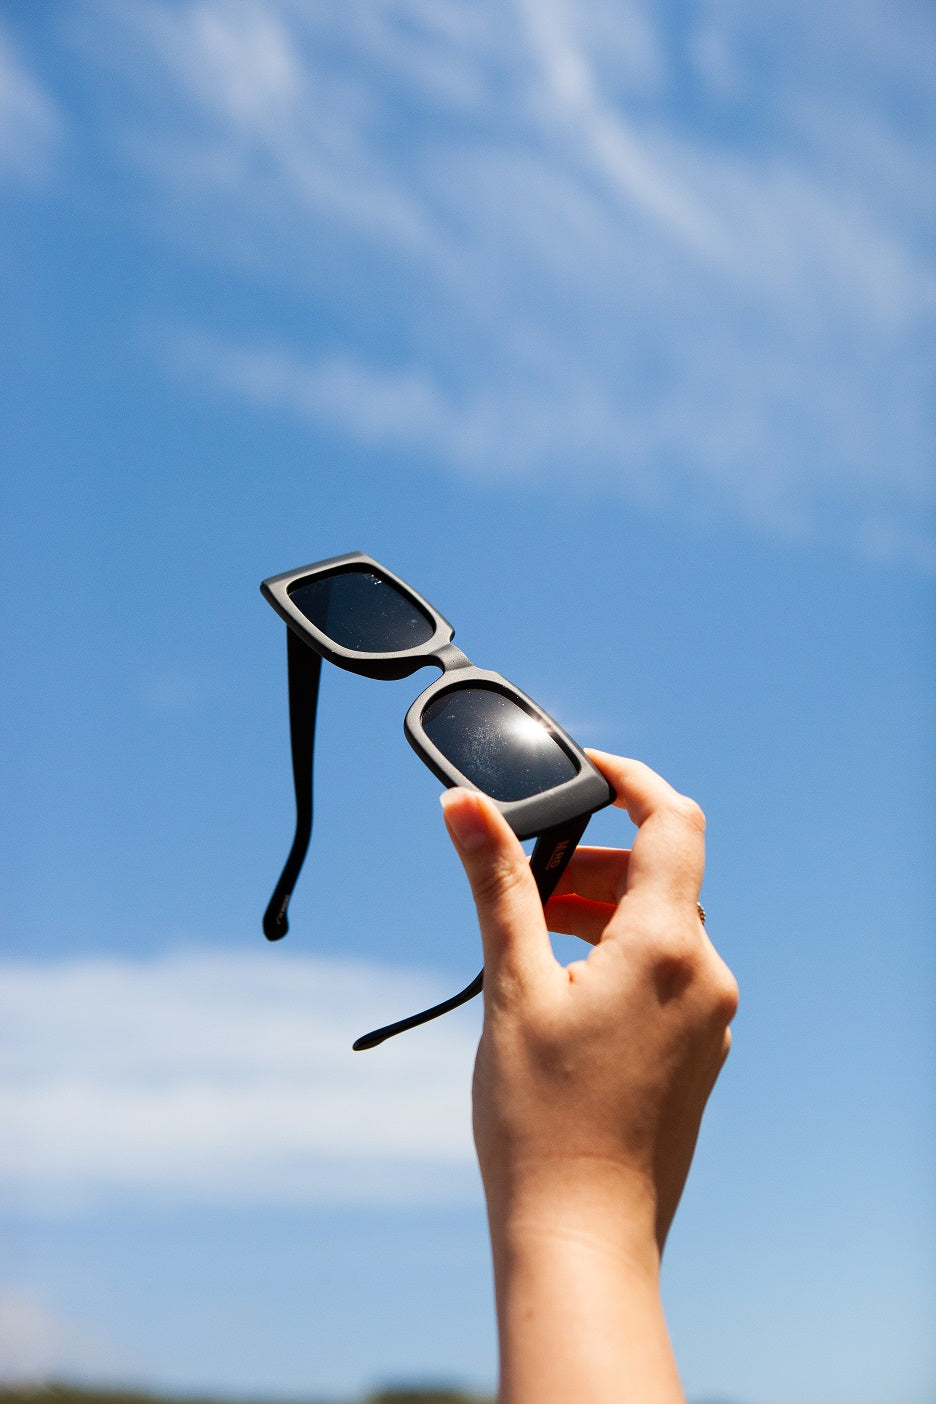 The Lulus Sunglasses - Black | Moana Road